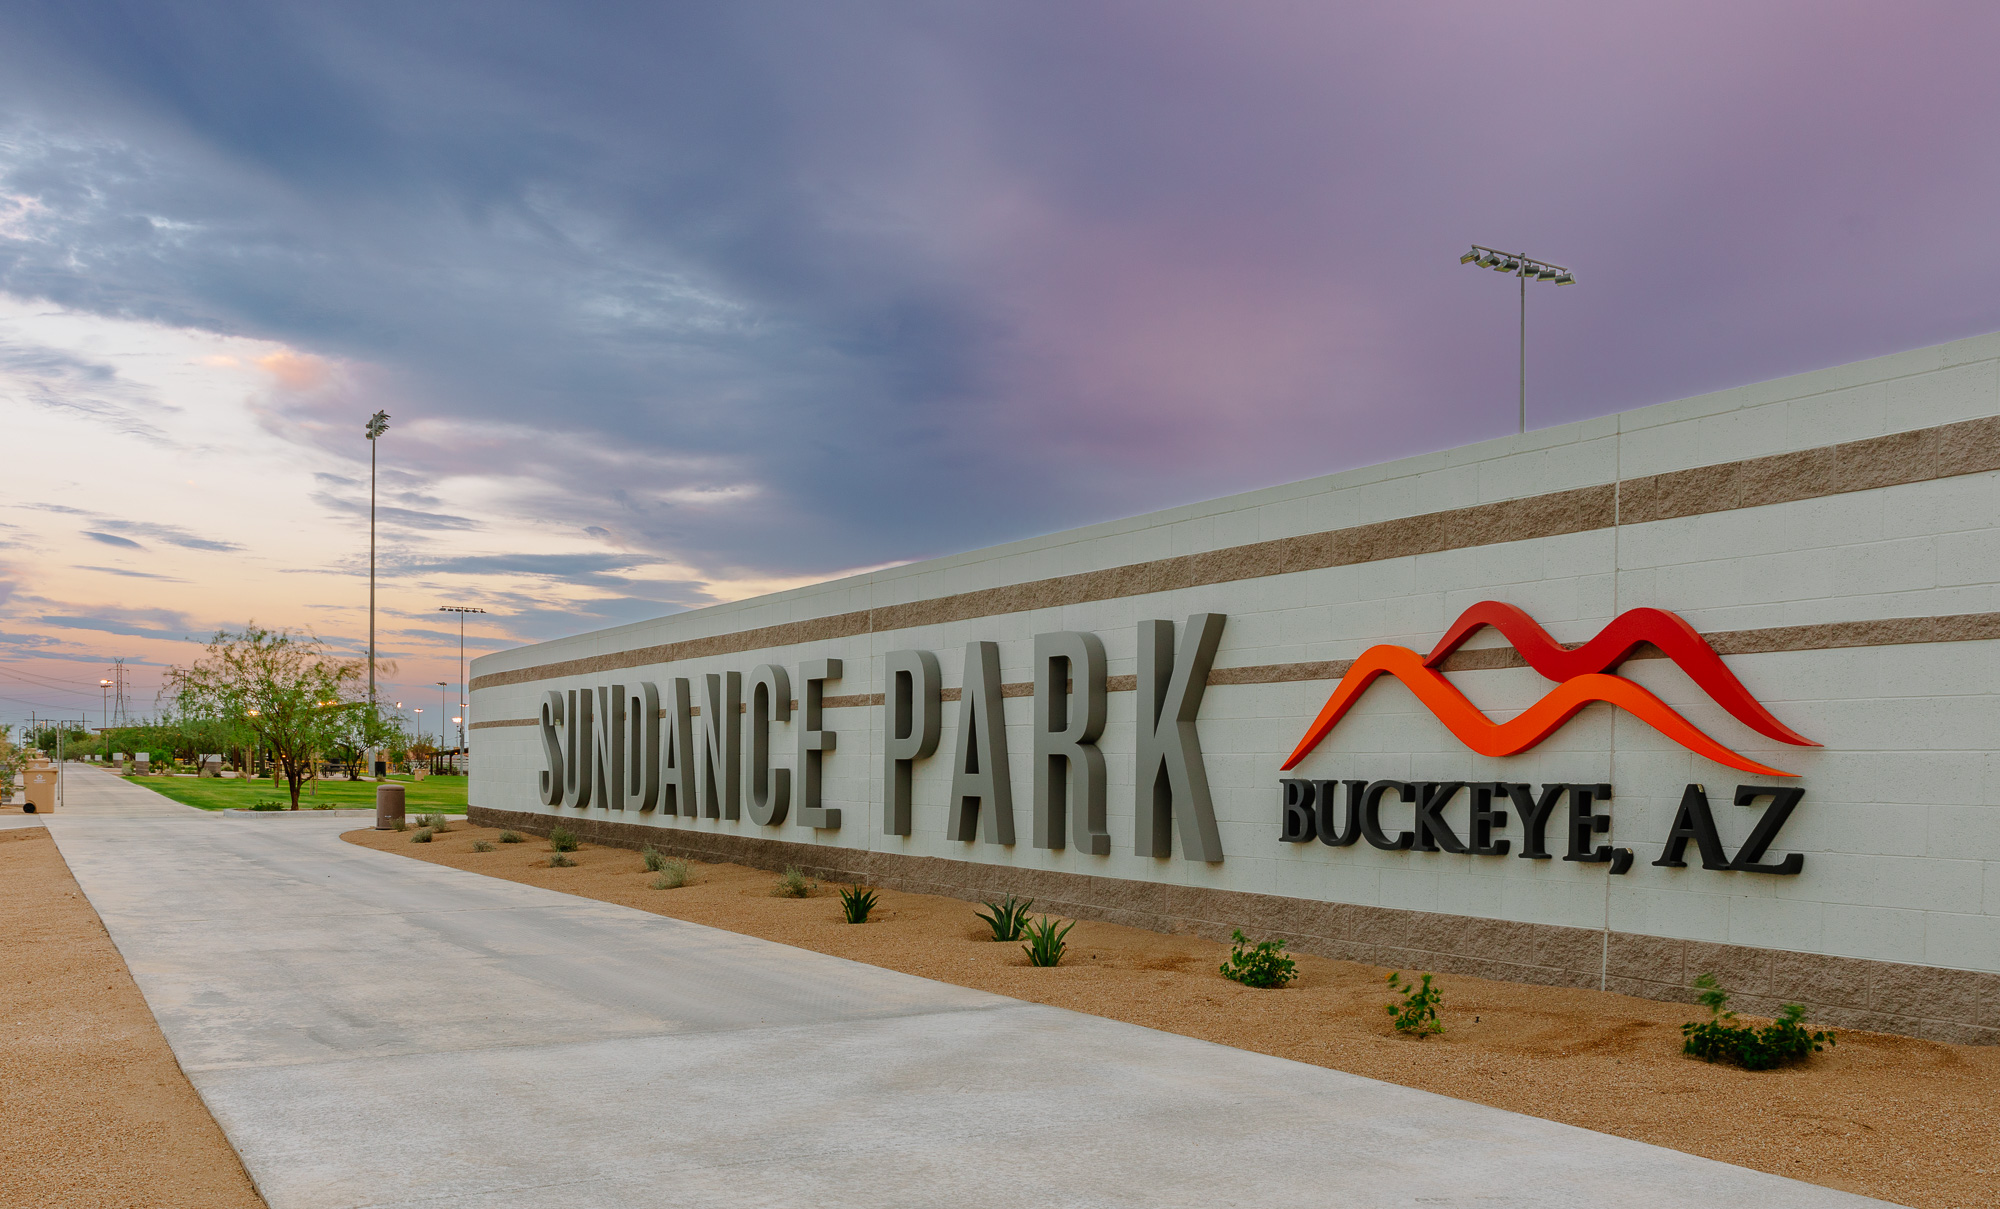 A sign for Kennedy Skate Park in Buckeye, Arizona.